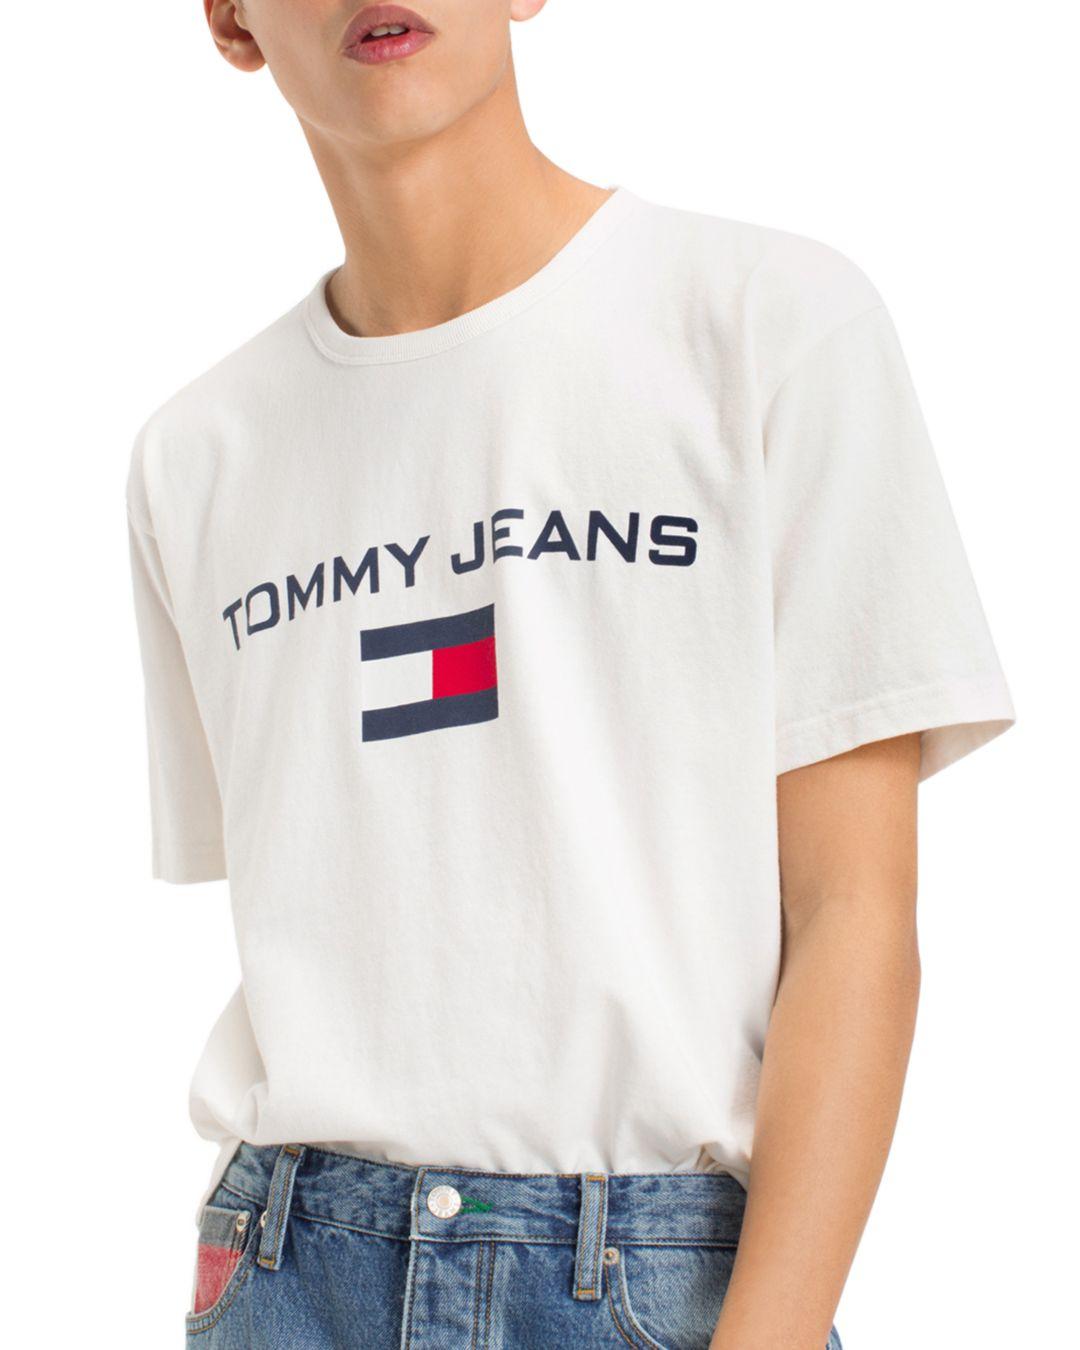 tommy jeans t shirt mens 90s Off 59% - canerofset.com